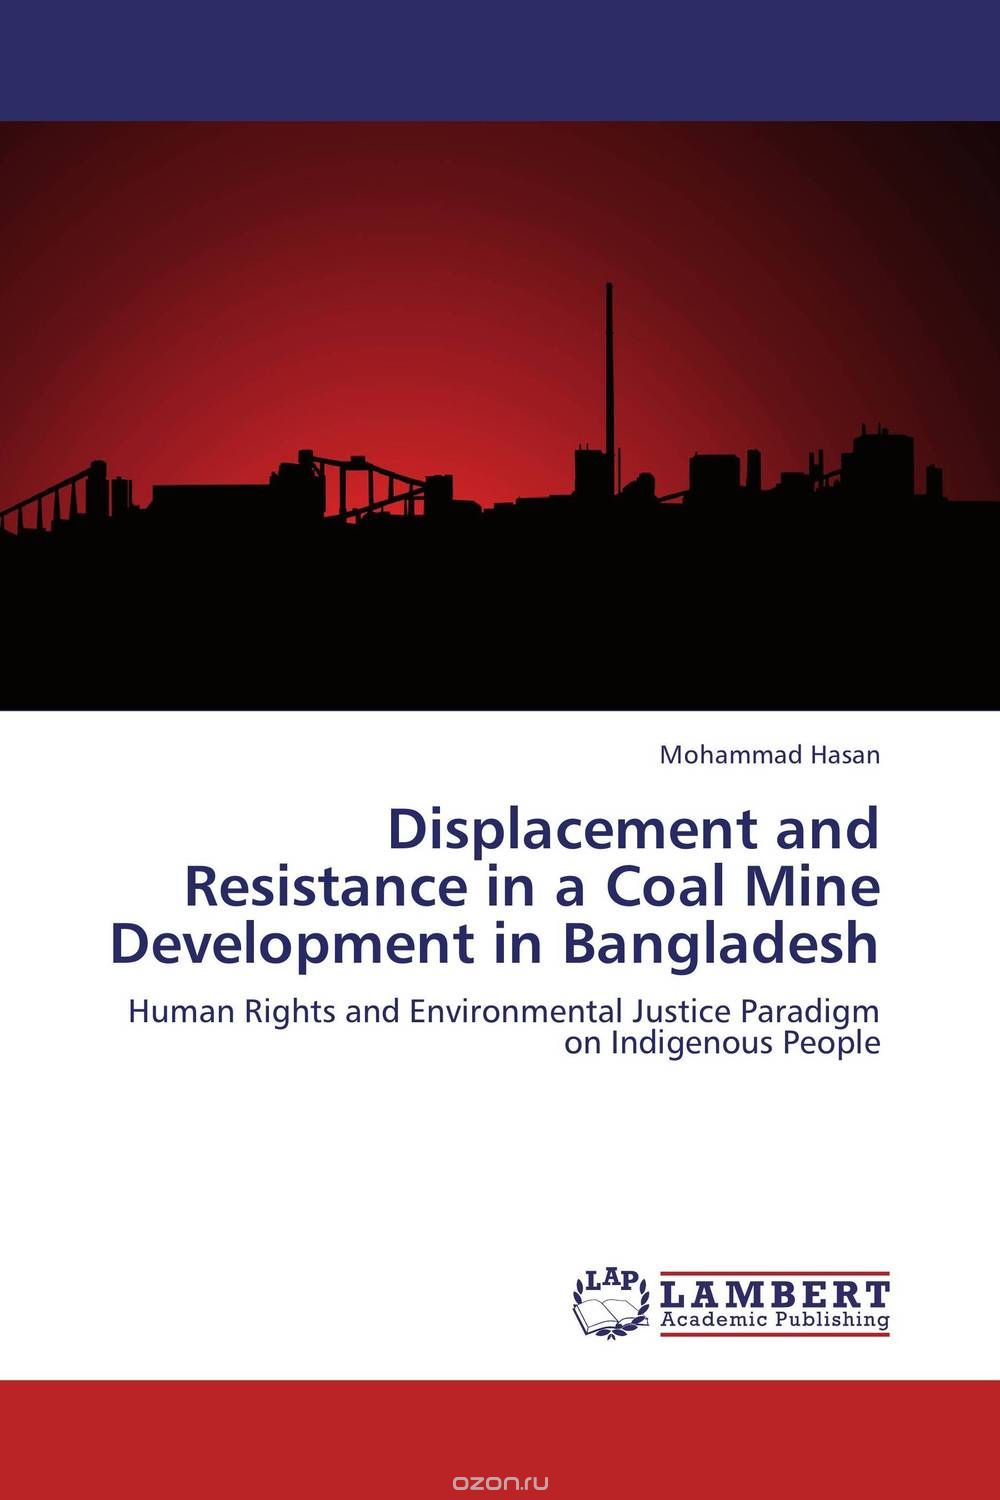 Скачать книгу "Displacement and Resistance in a Coal Mine Development in Bangladesh"